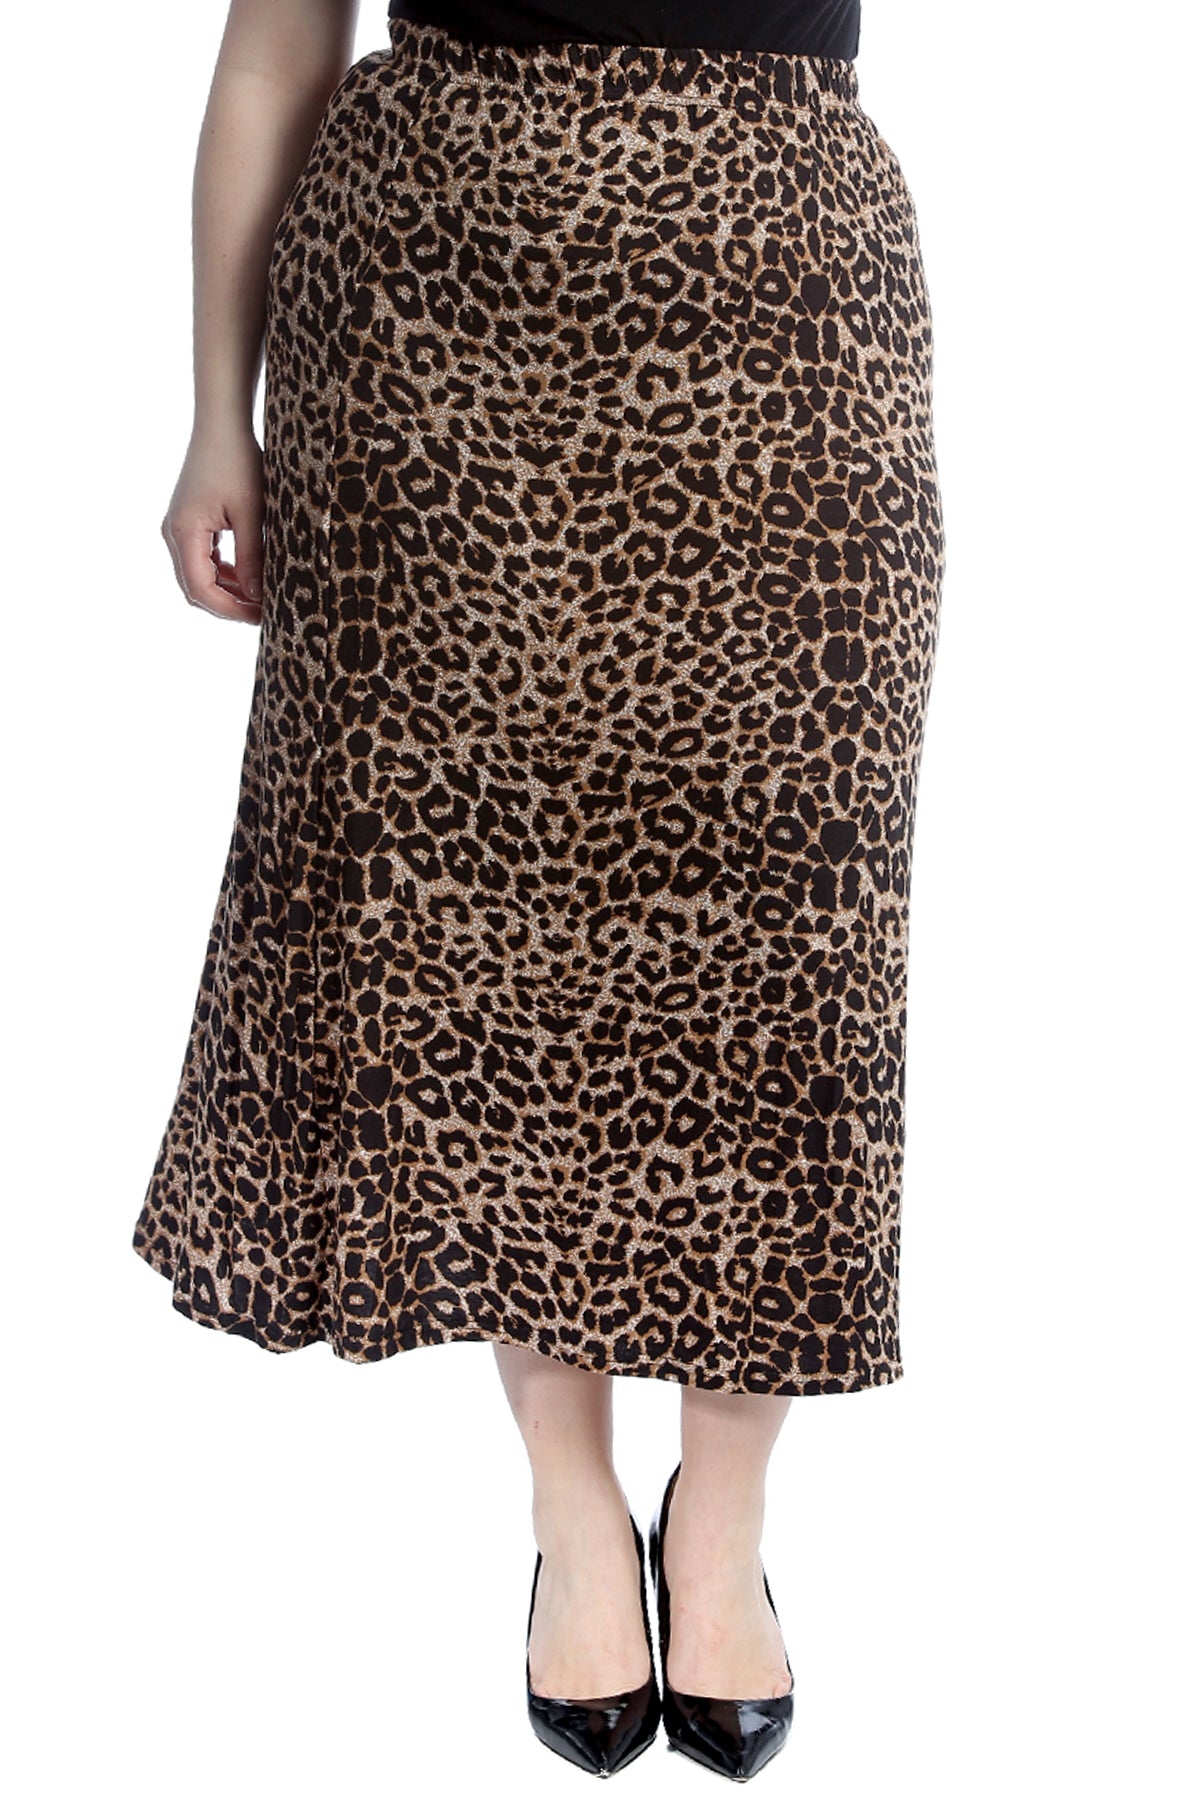 5042 Leopard Print Mid Calf Skirt